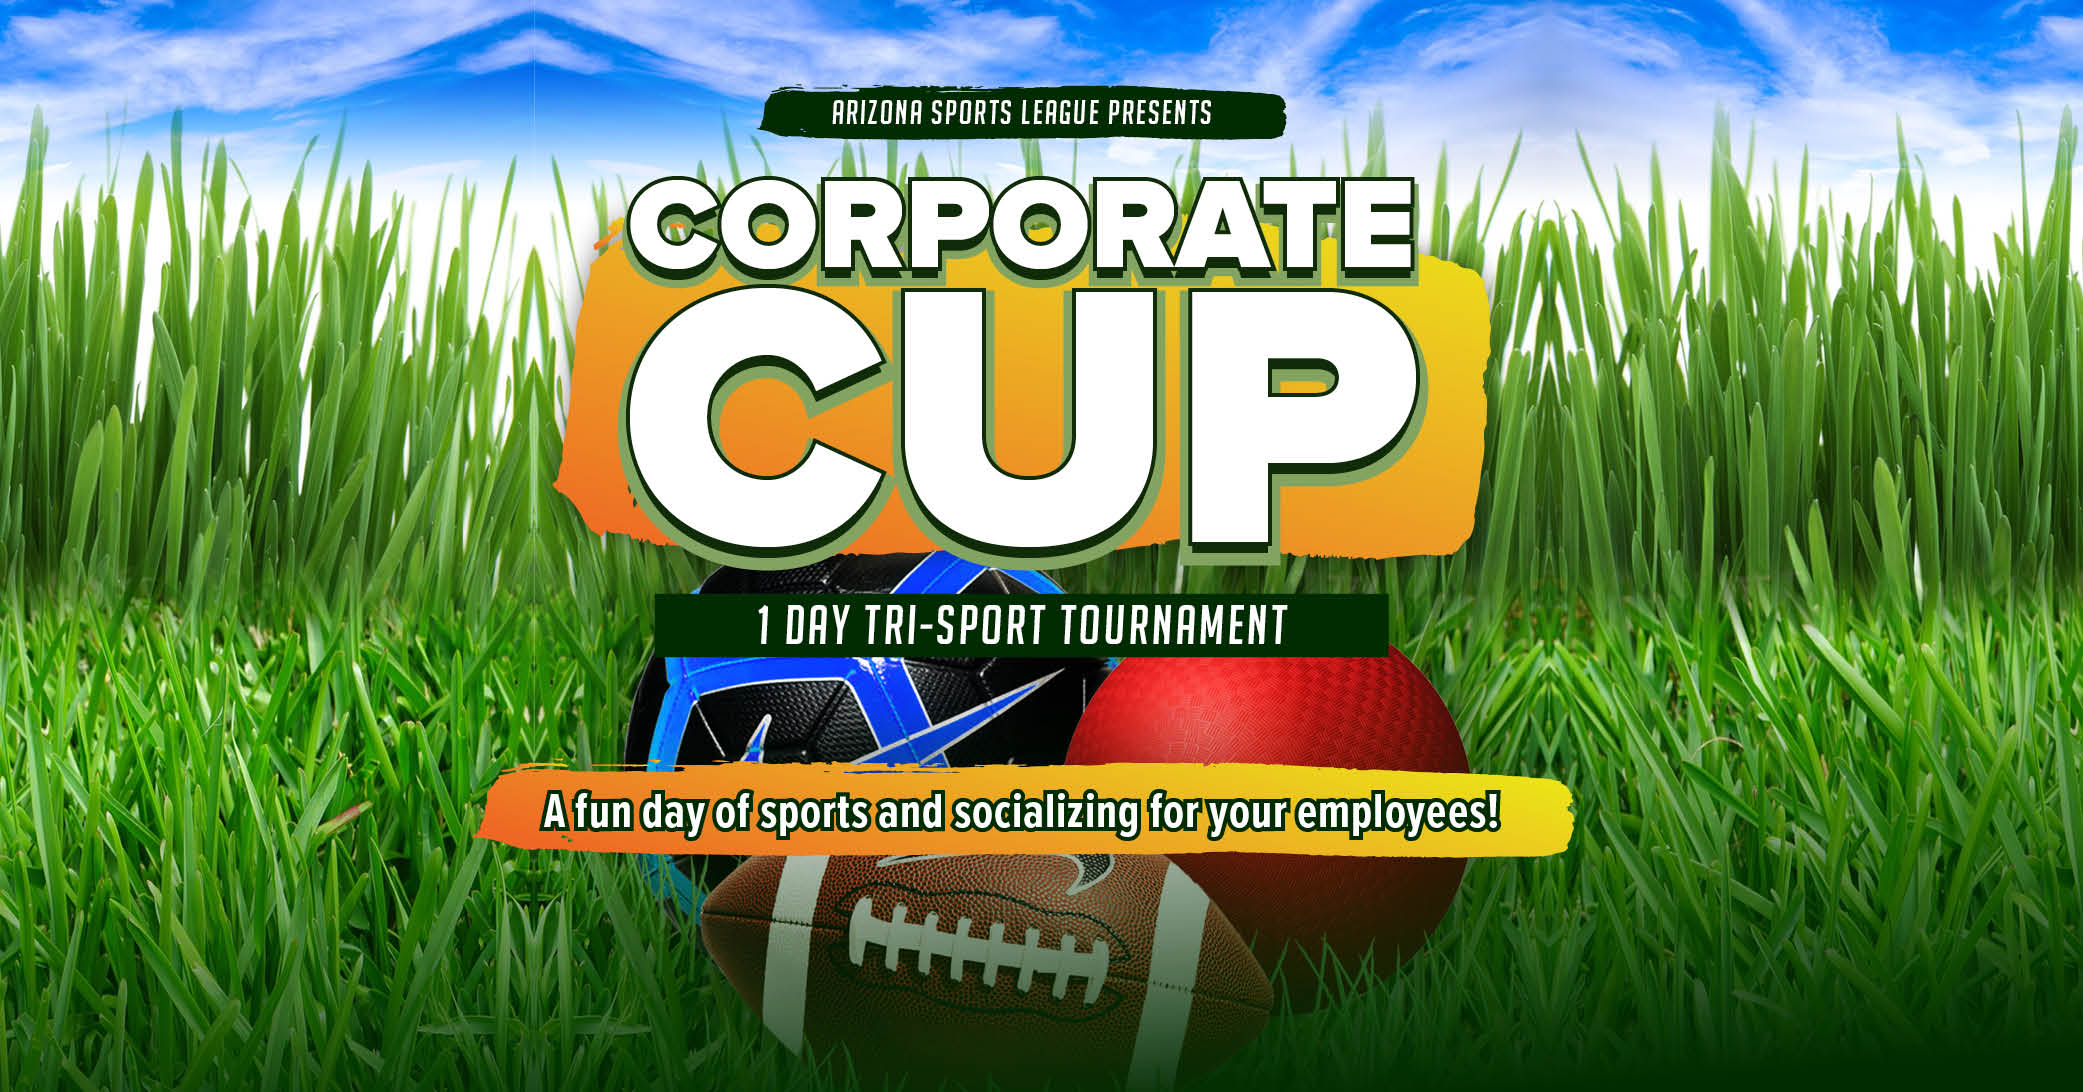 The Corporate Cup Arizona Sports League